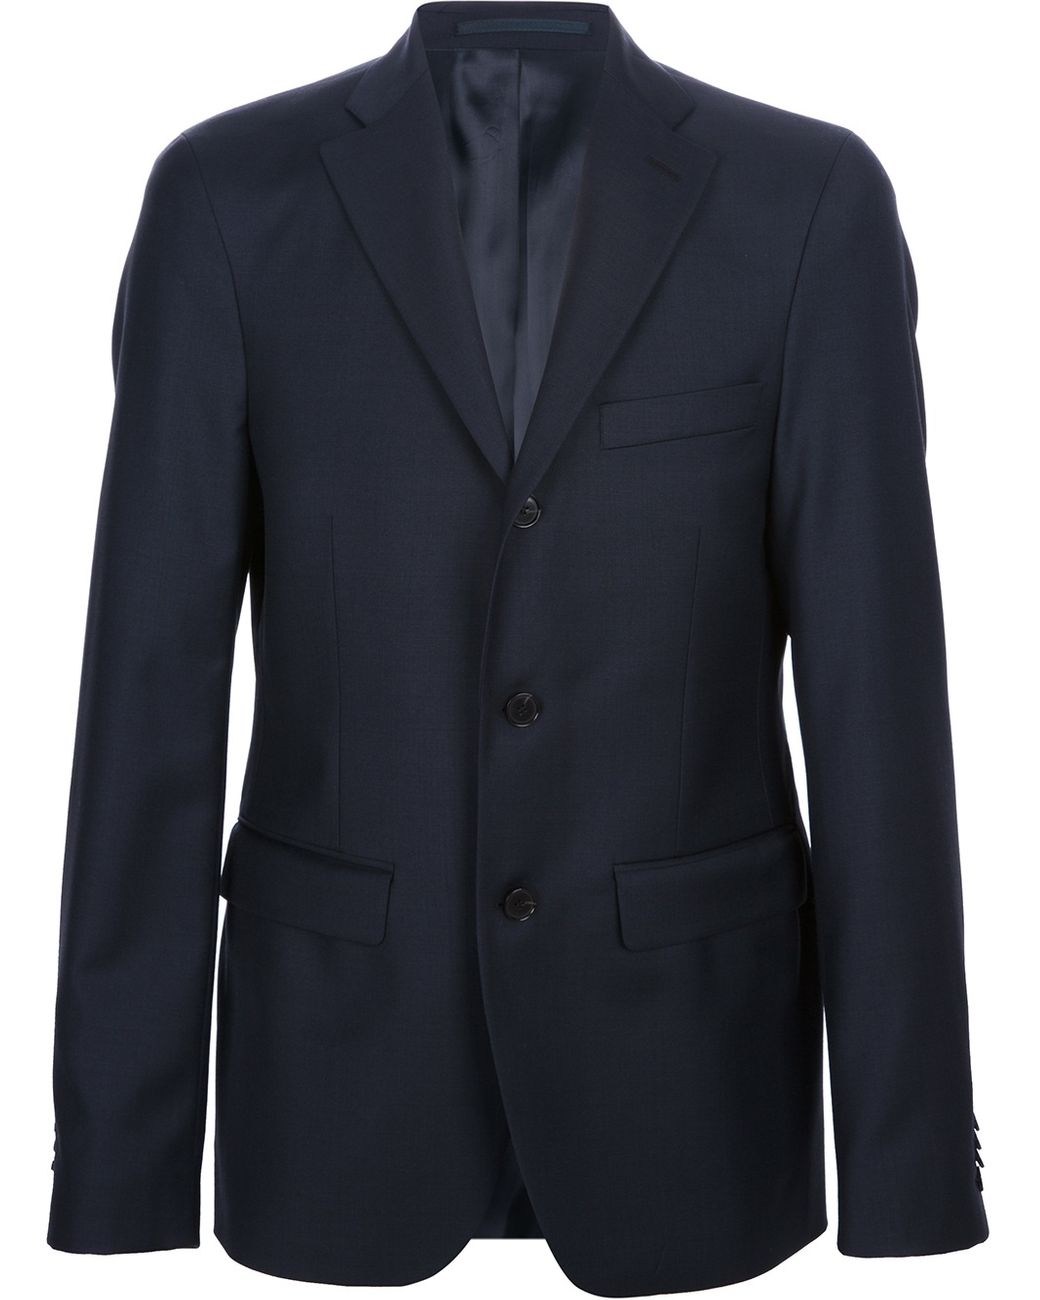 Acne Studios Drifter Suit Jacket in Navy (Blue) for Men | Lyst UK